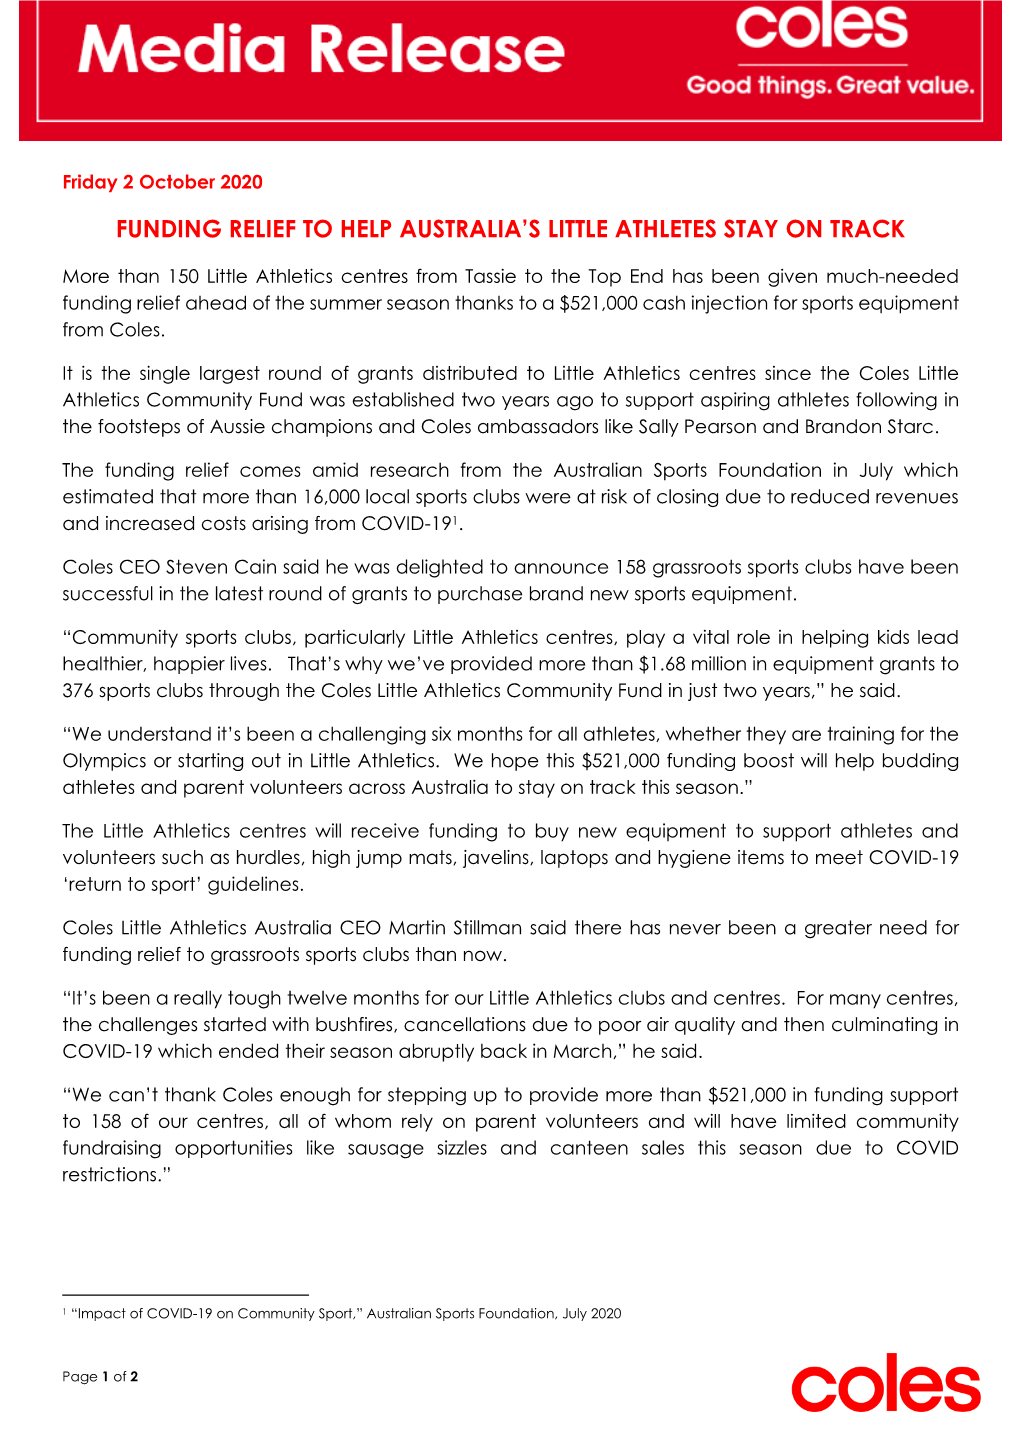 Funding Relief to Help Australia's Little Athletes